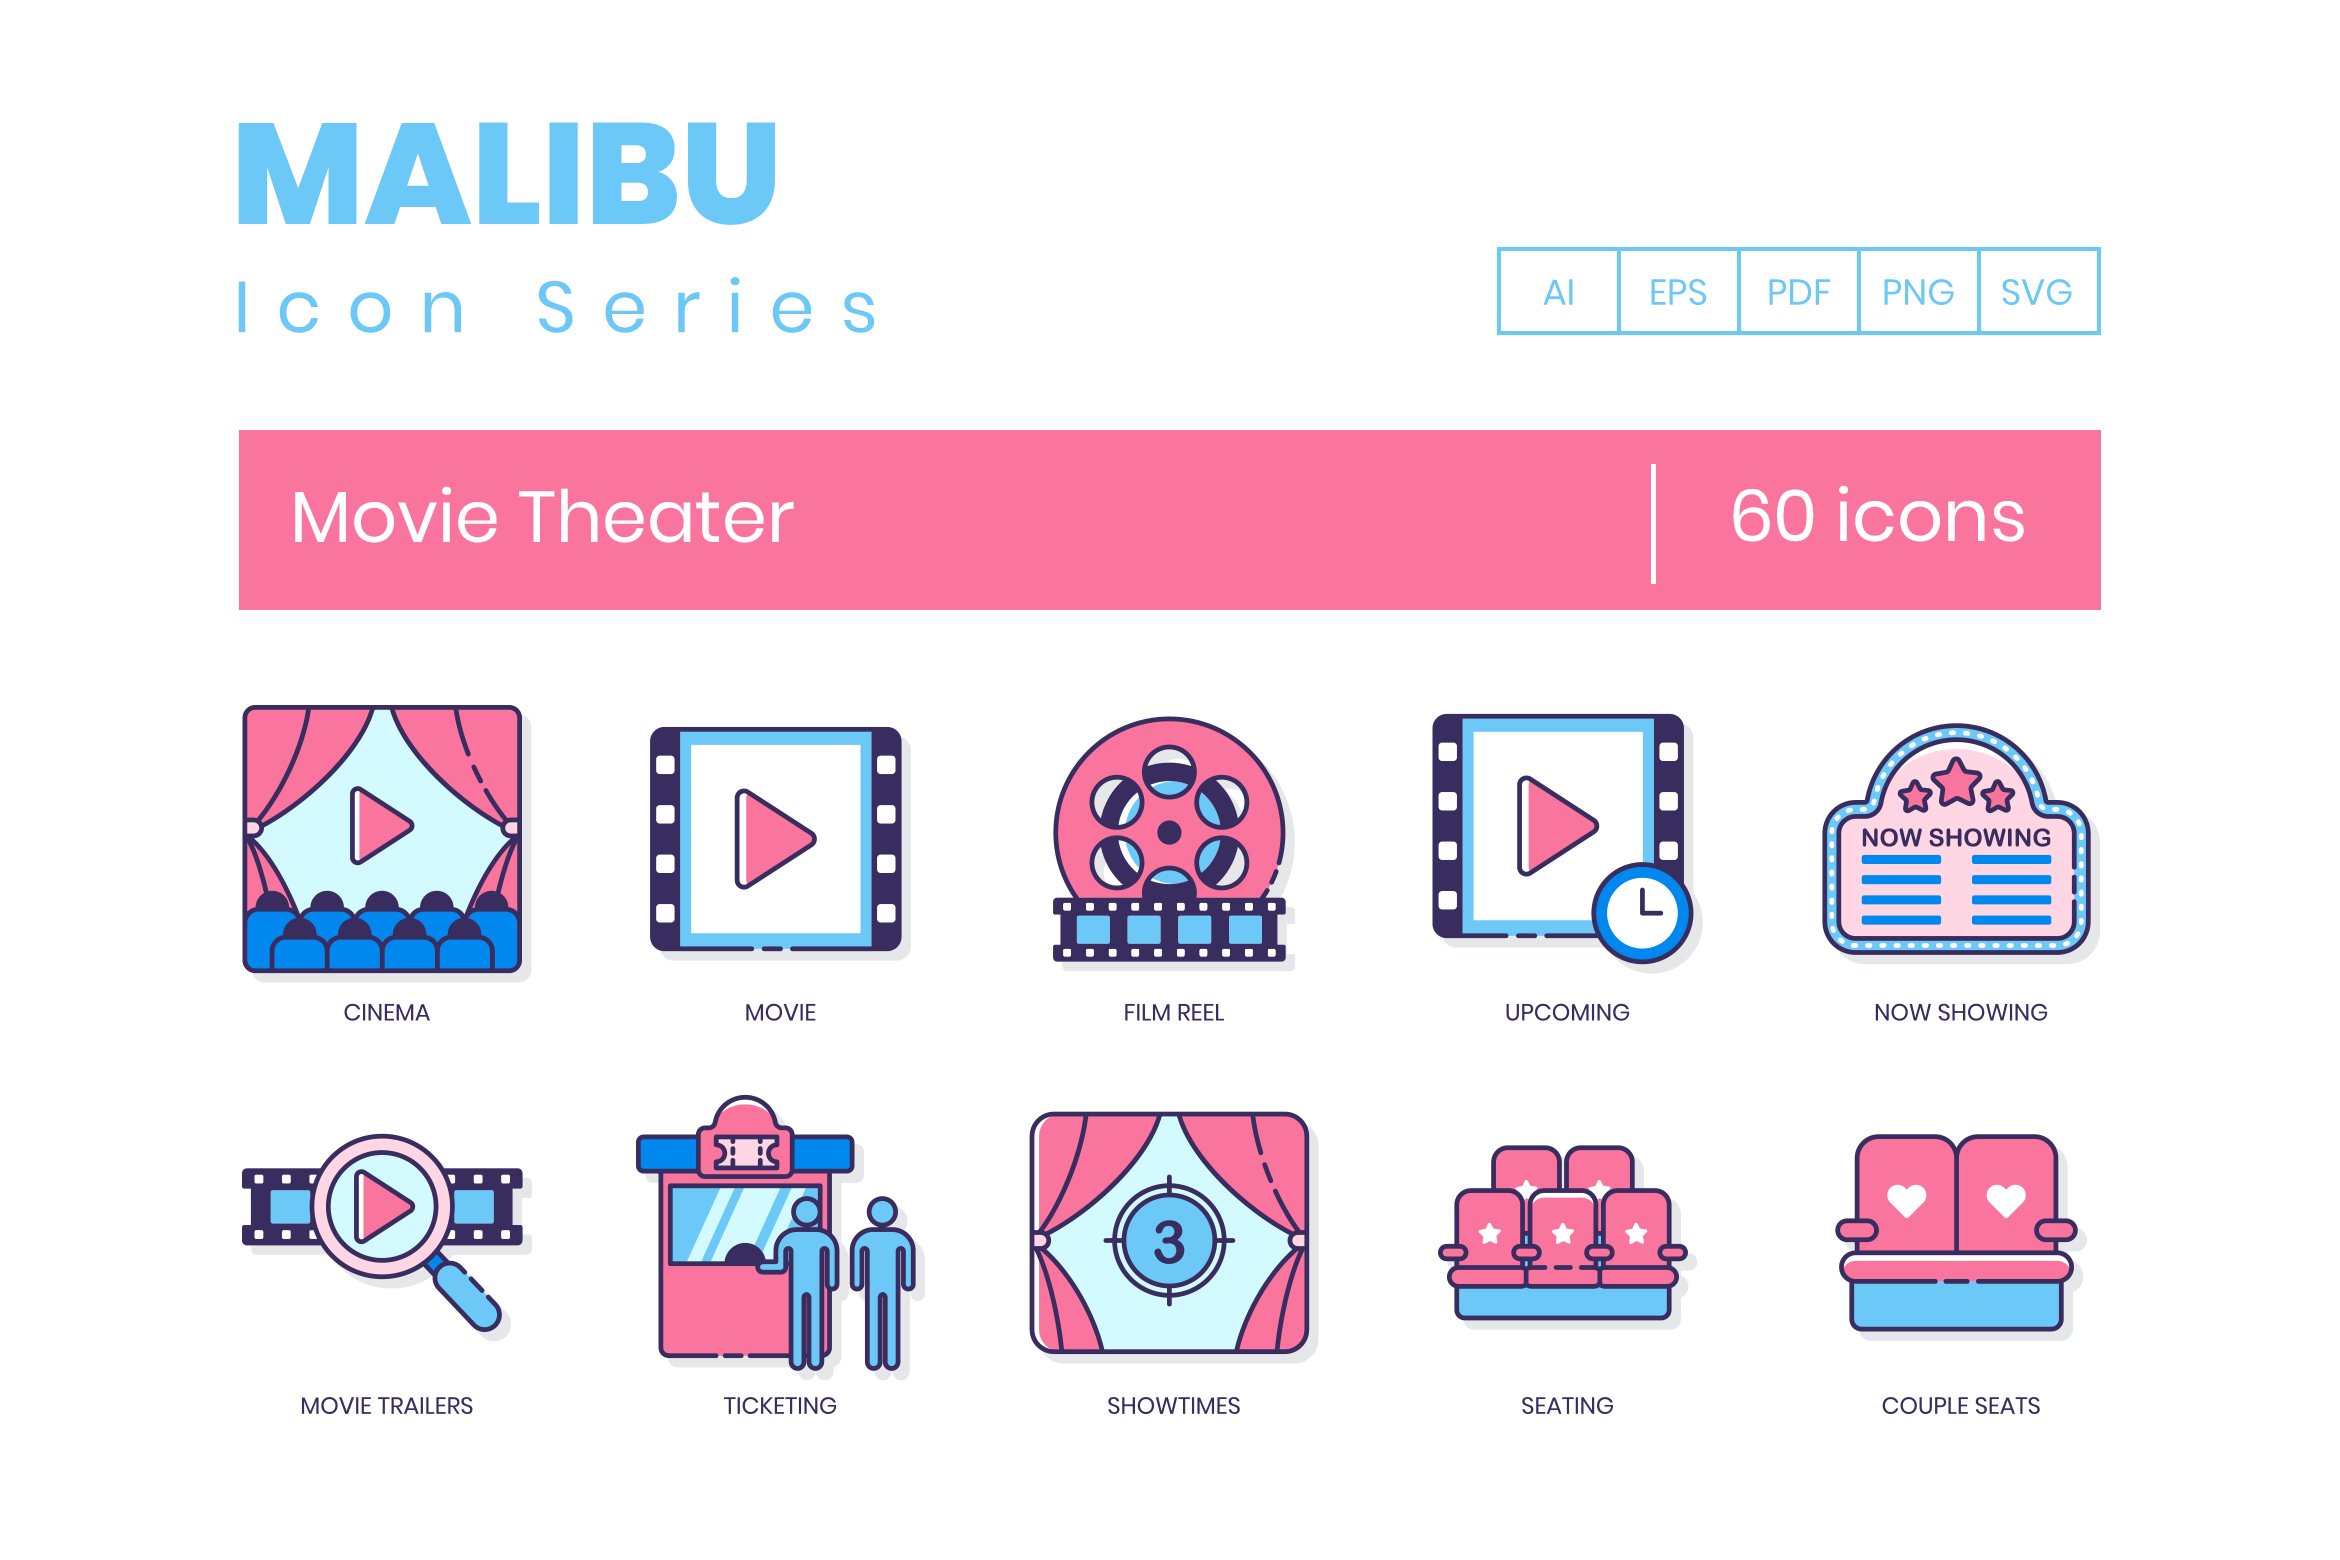 60 Movie Theater Icons - Malibu cover image.